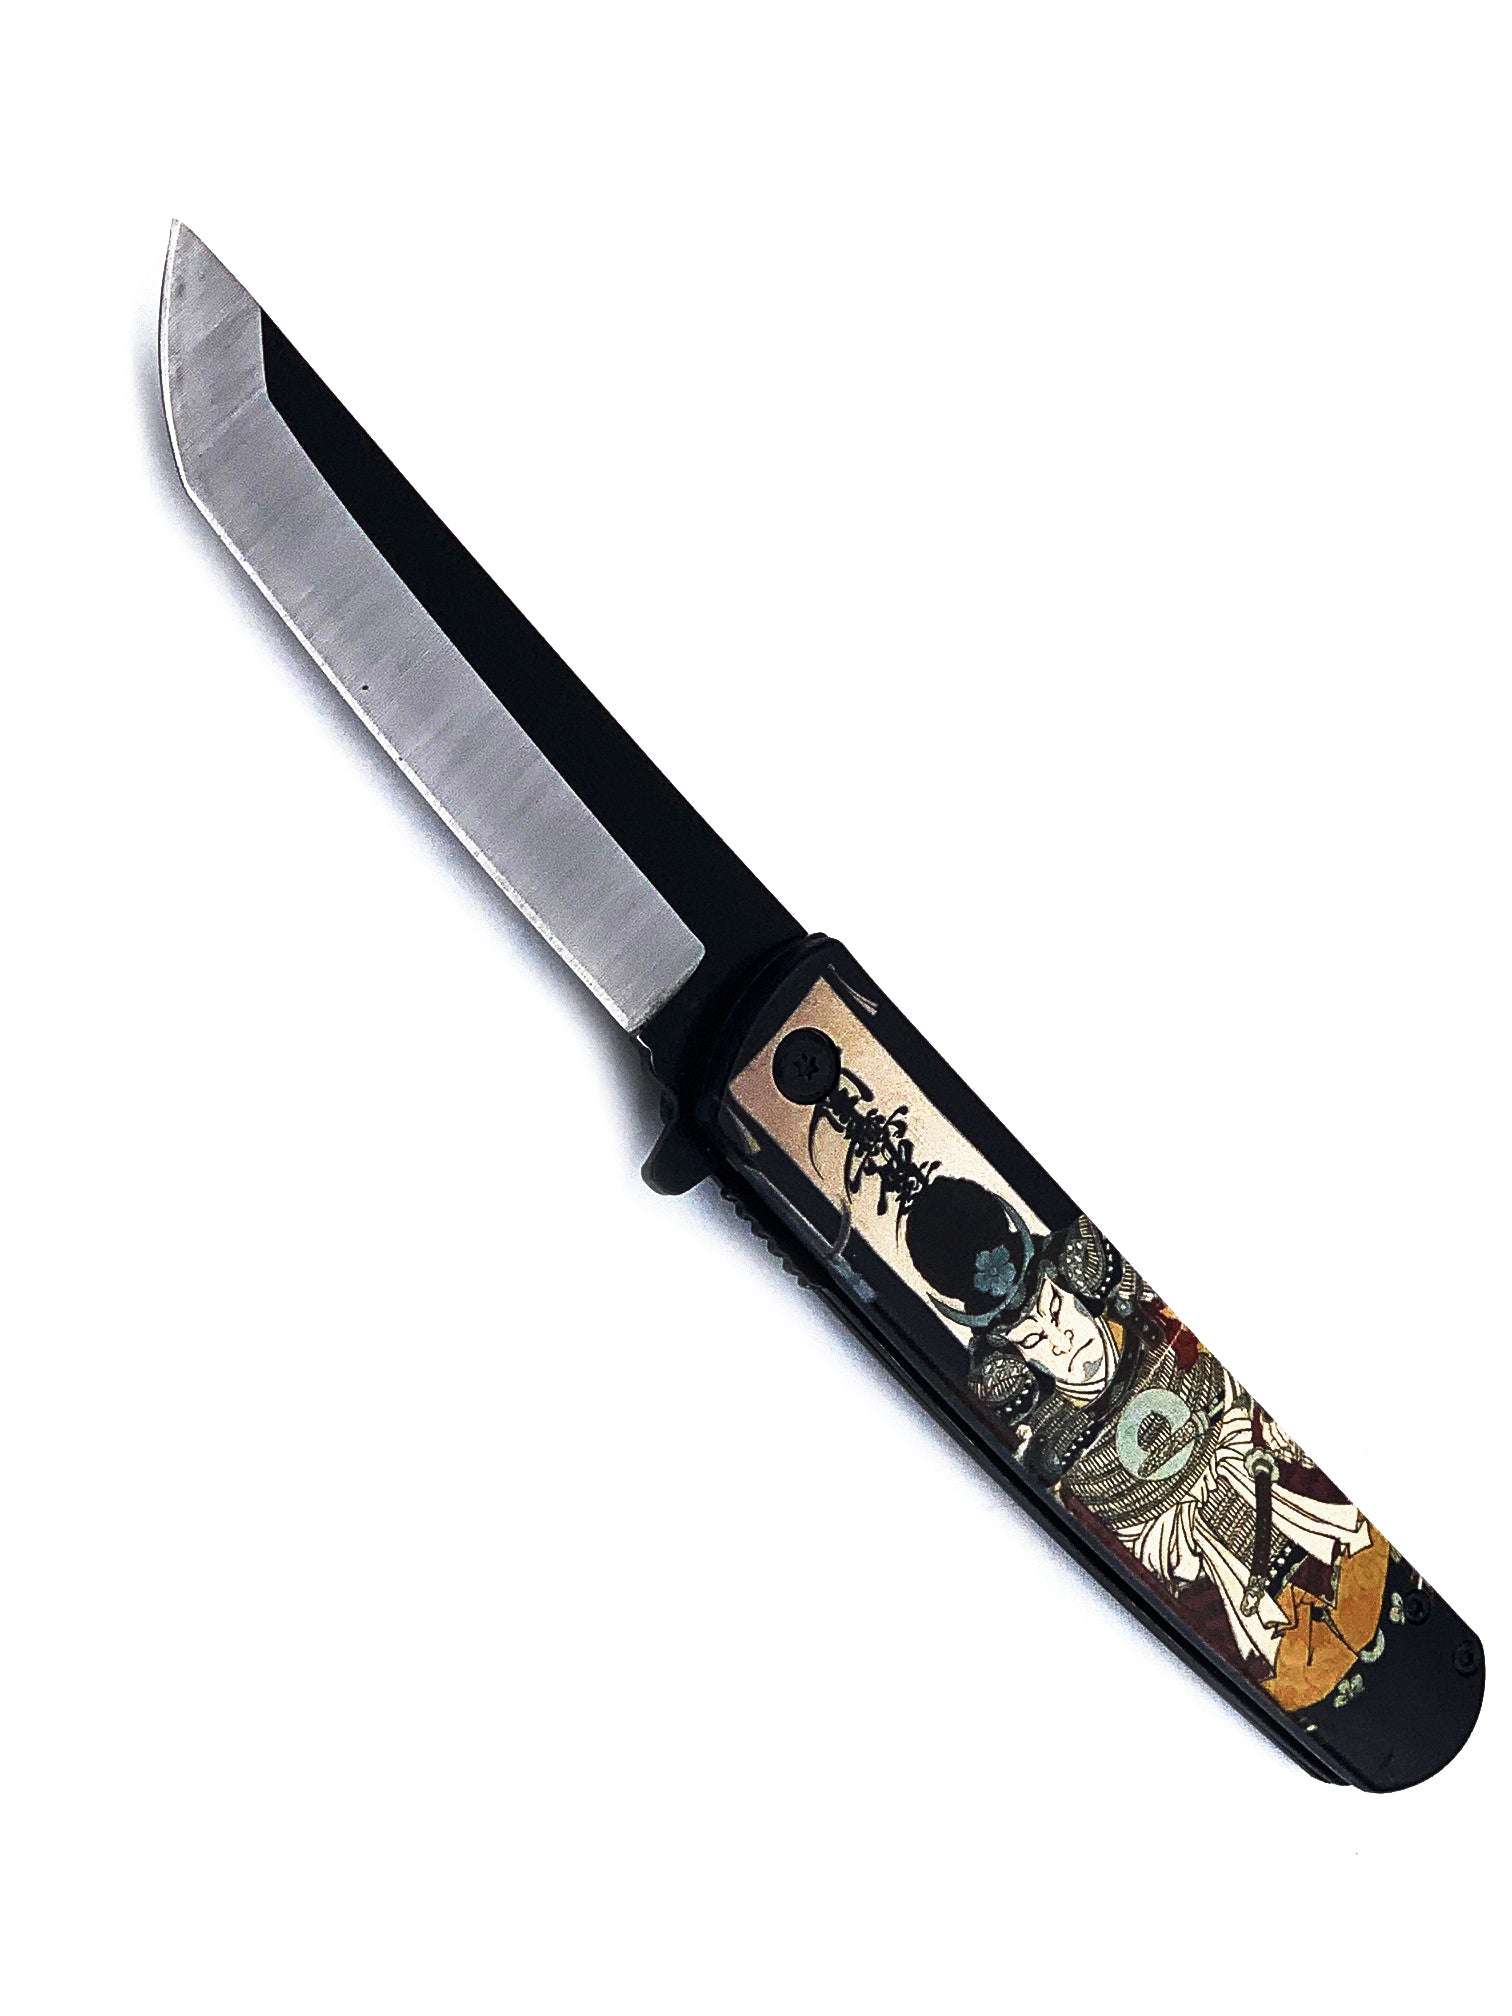 8 DRAGON Tanto Japanese Style Katana Assisted Spring Folding Pocket Knife  NEW